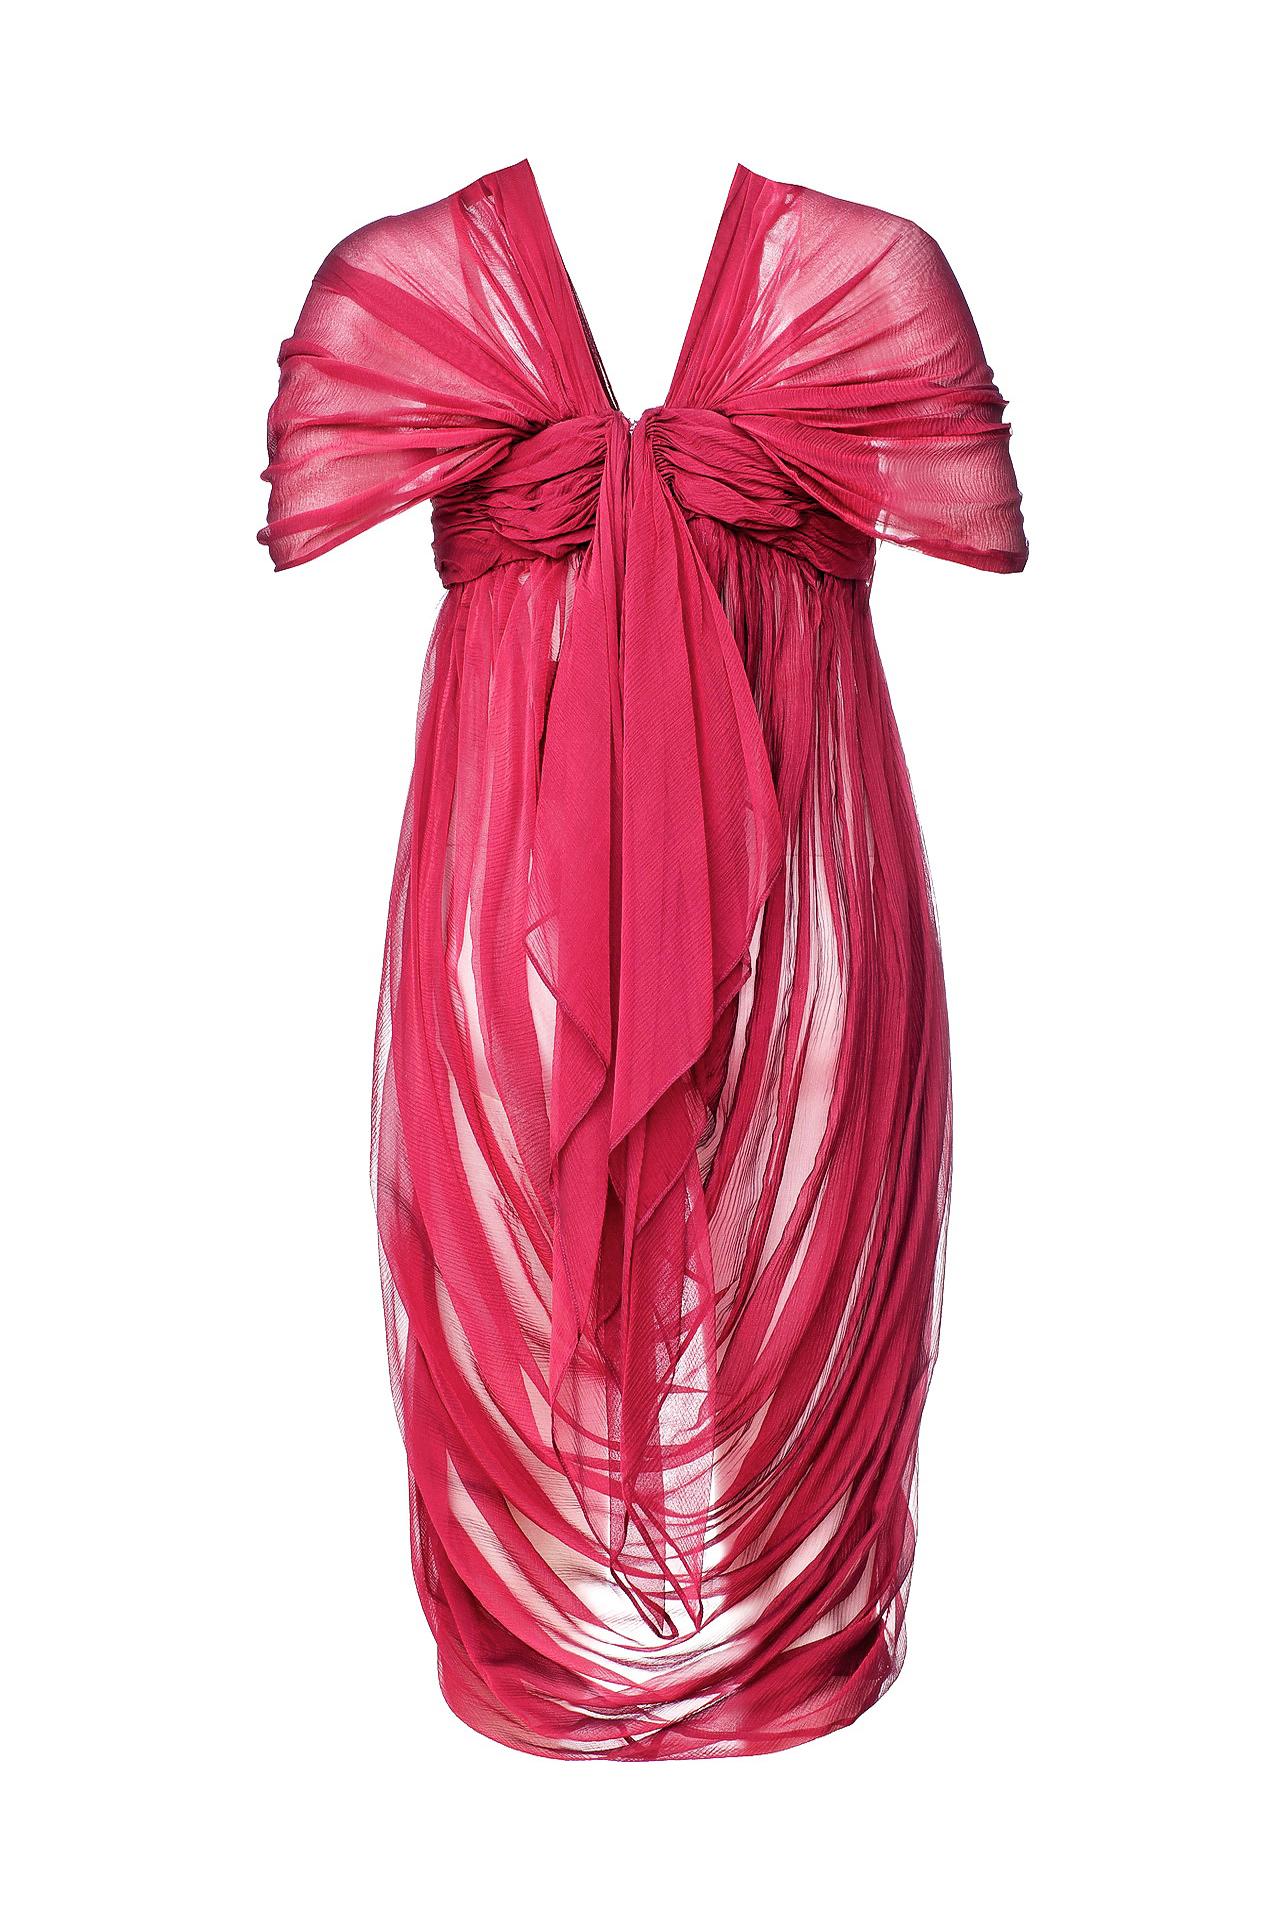 2008 Vintage 
Alexander McQueen 
Red Chiffon Silk Tunic Dress

IT Size 42 - US 6

New